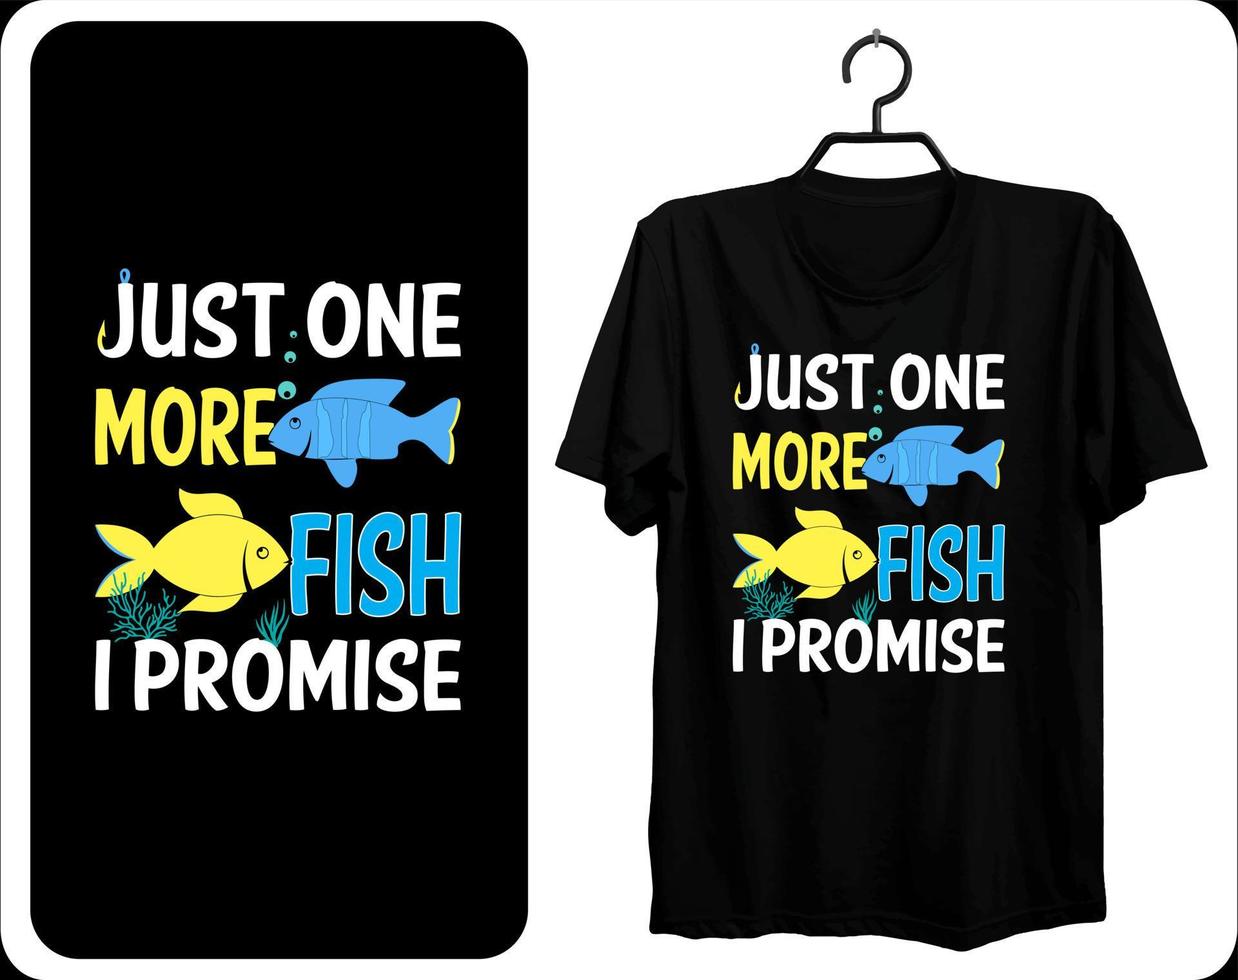 Just one more fish I promise. Fishing t shirt and mug design vector illustration EPS File format